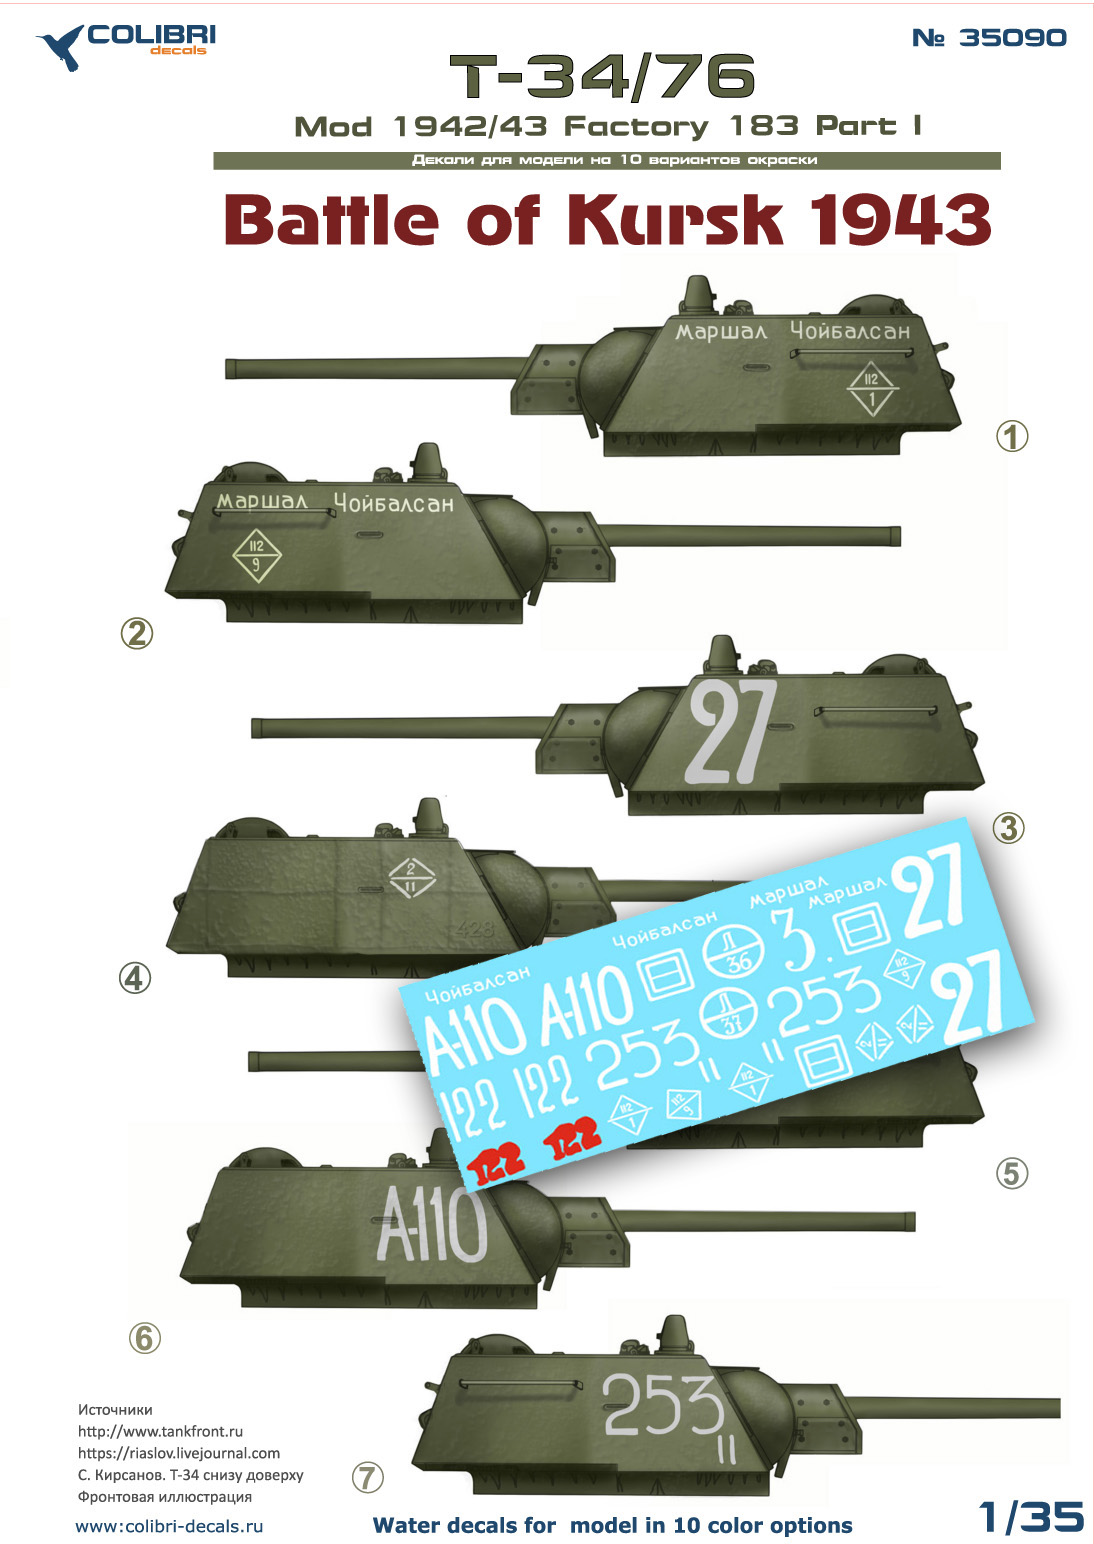 Декаль 1/35 Т-34/76 мod 1942/43 Factory 183 Part I Battle of Kursk 1943 (Colibri Decals)